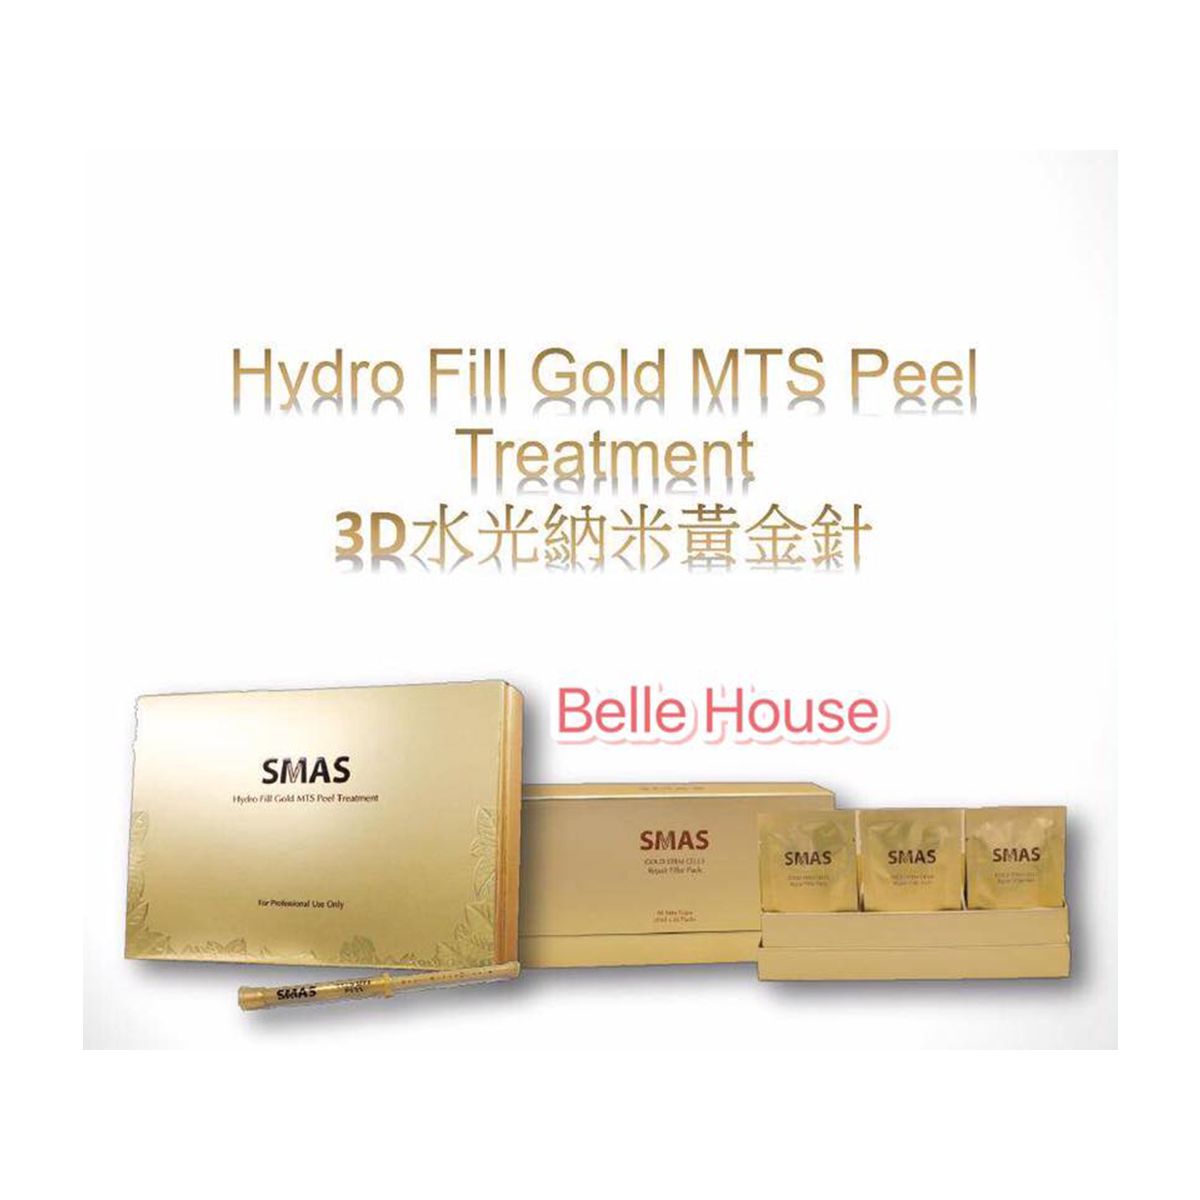 Belle House Beauty Portfolio: 3D白金黃金針